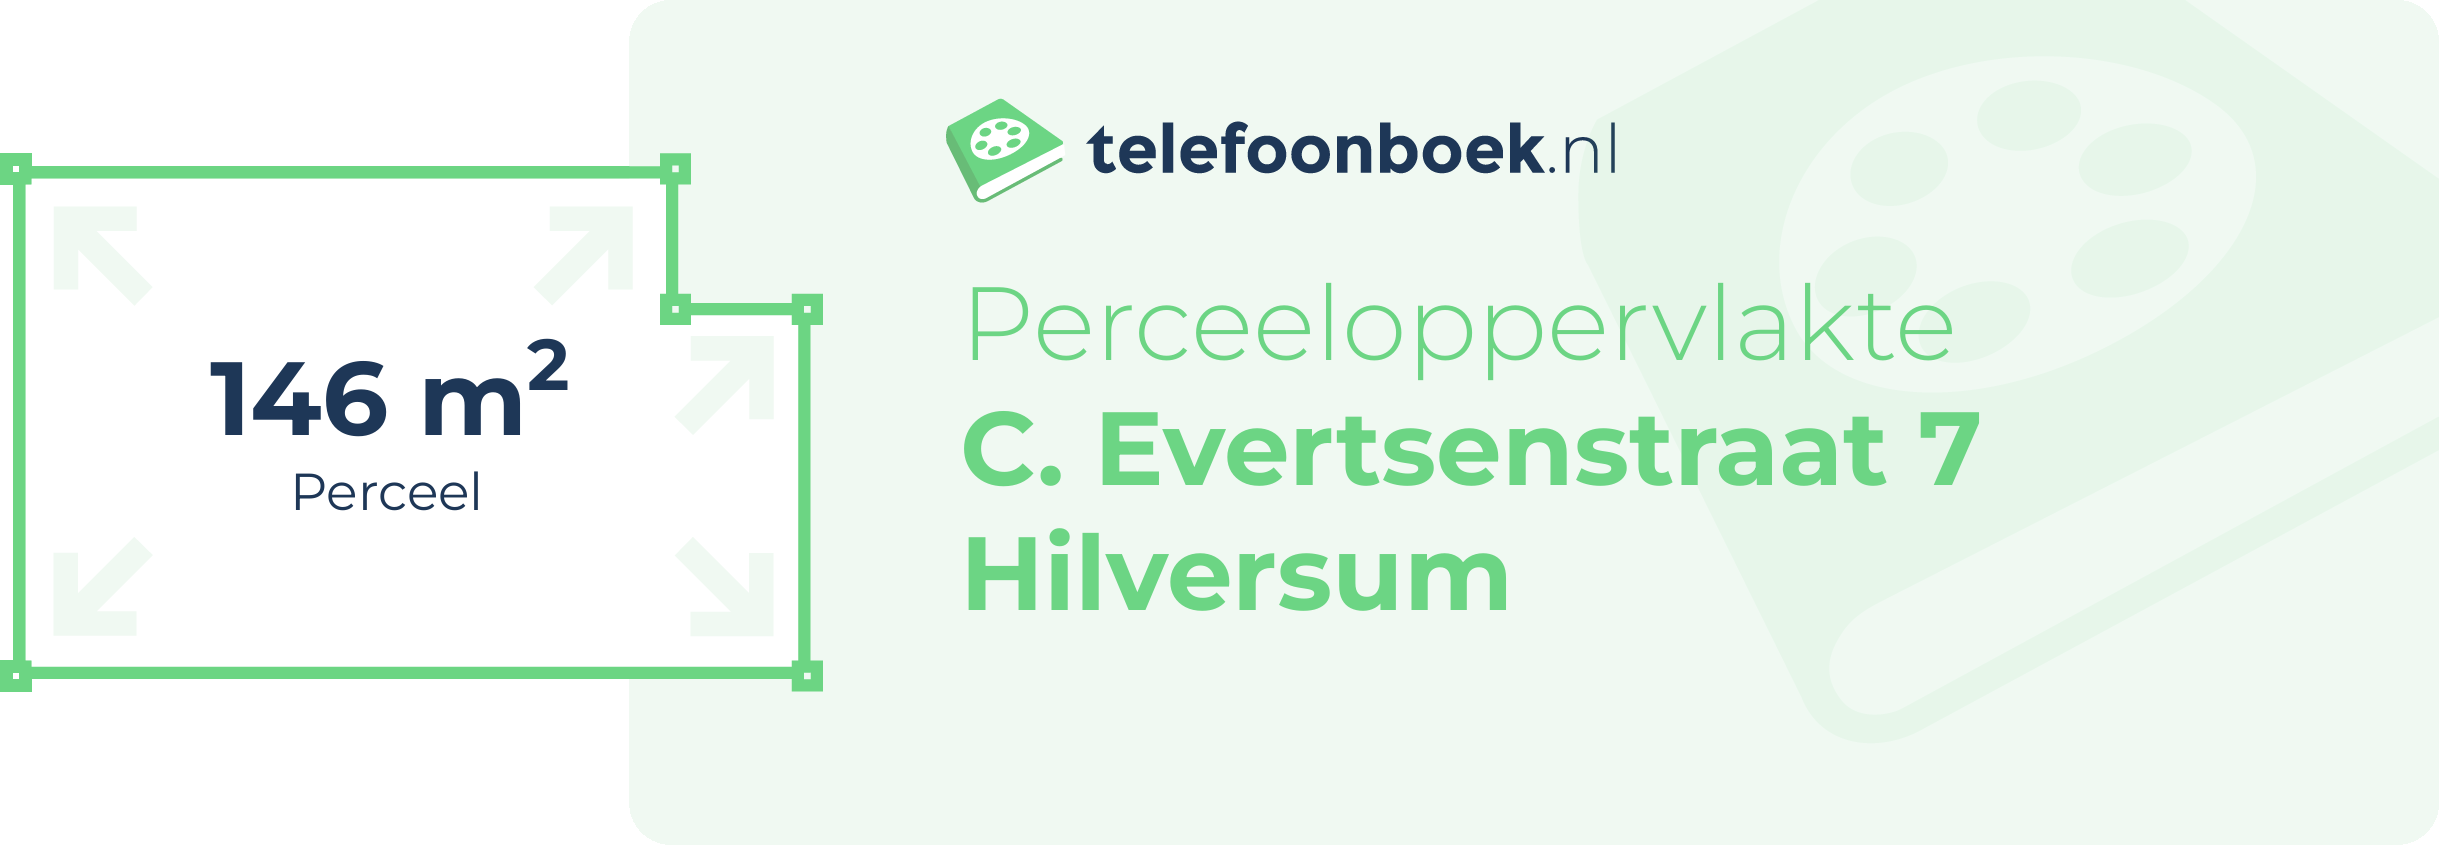 Perceeloppervlakte C. Evertsenstraat 7 Hilversum